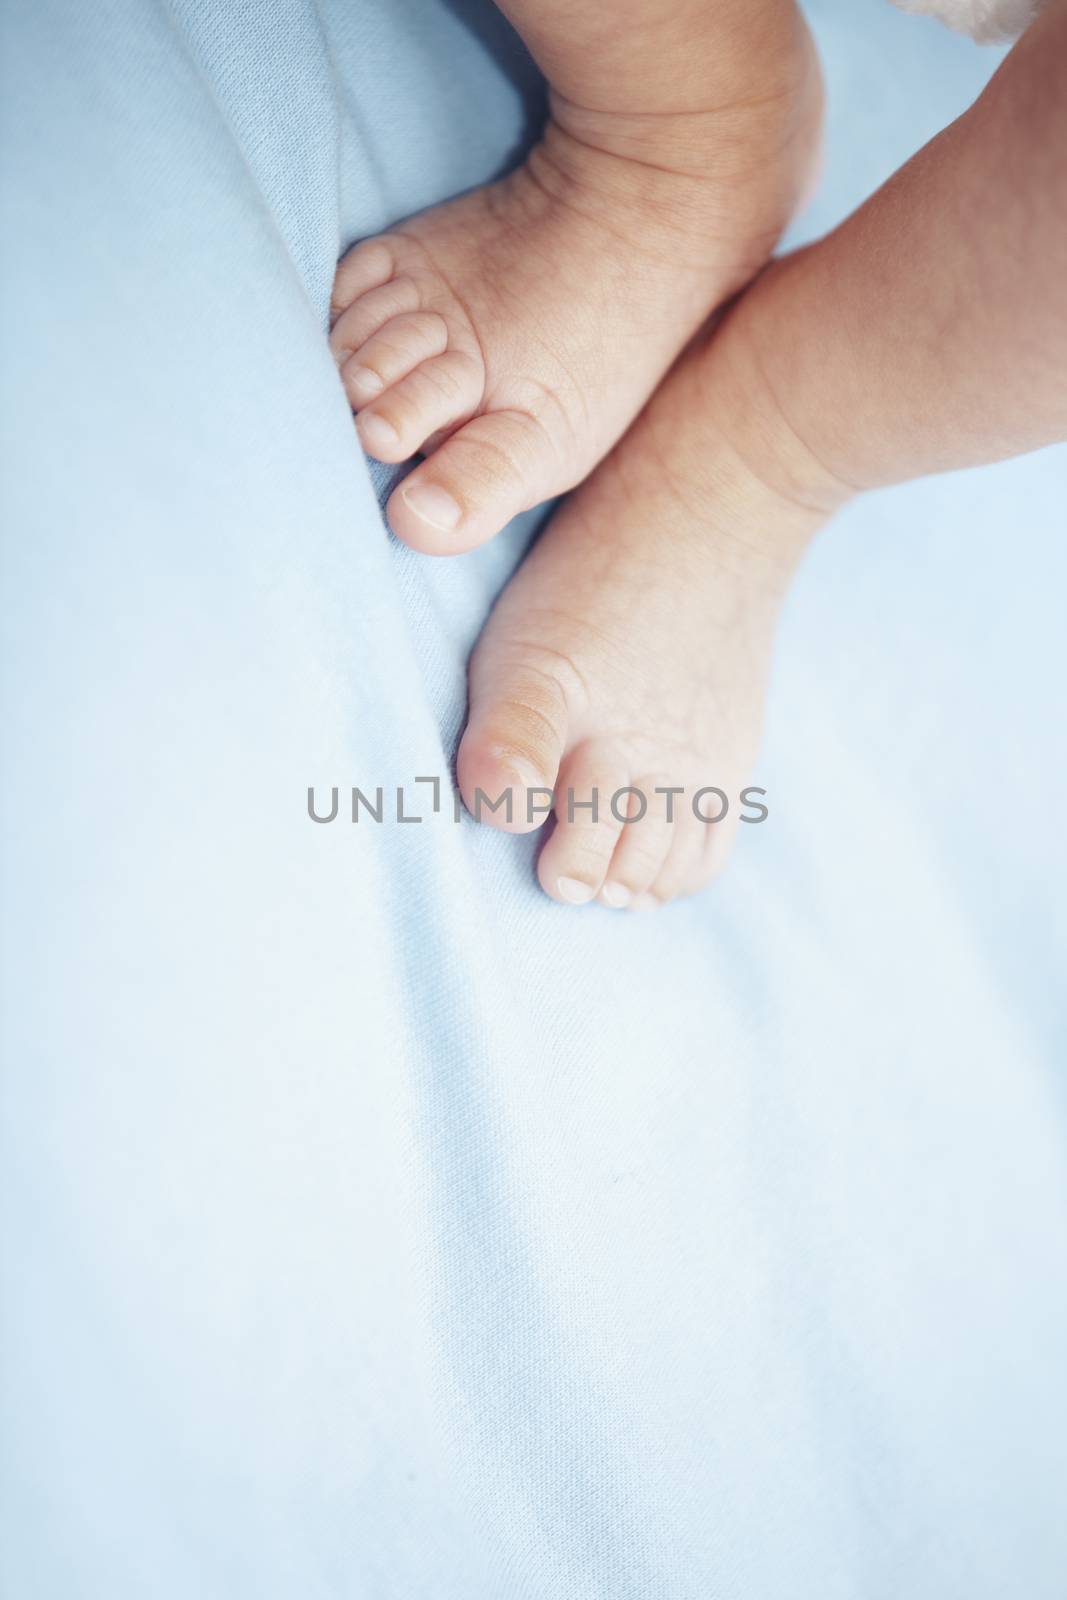 Baby legs by Novic